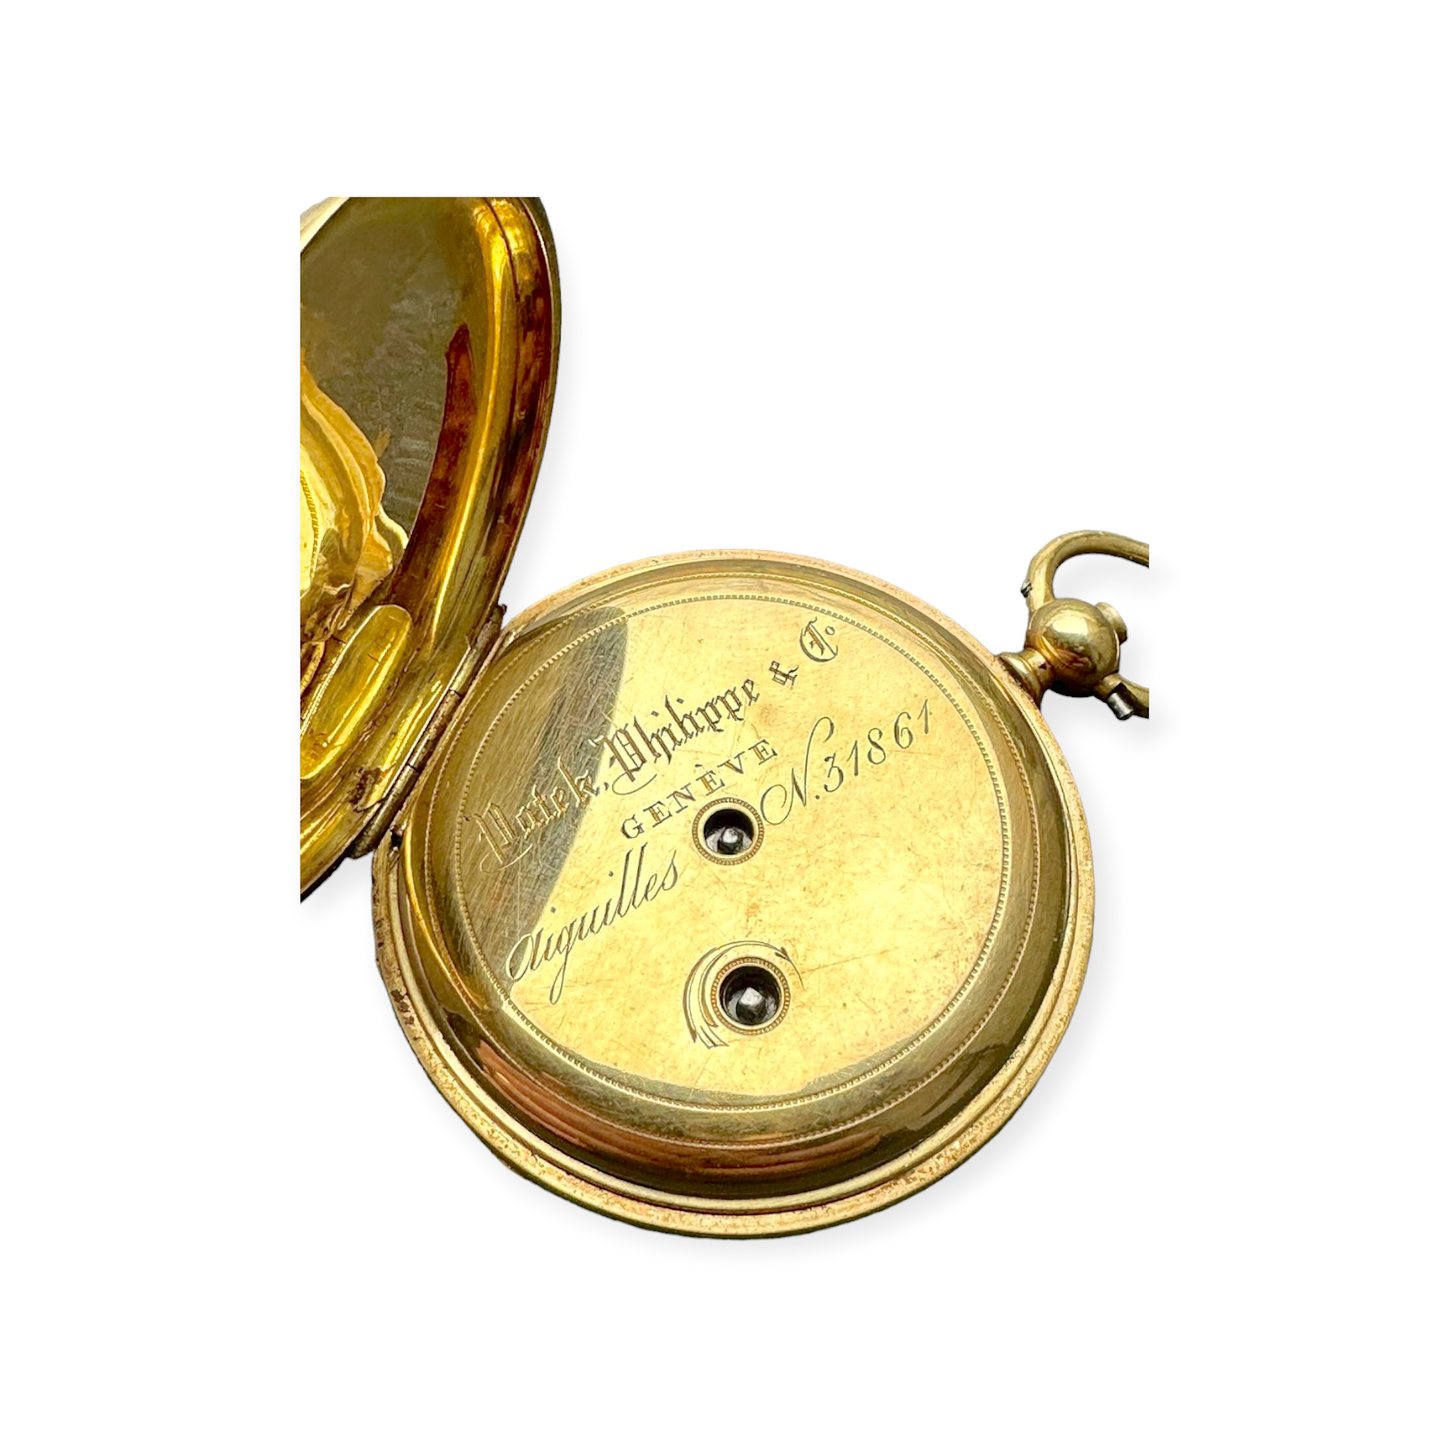 Patek Philippe Rare 1874 18k Gold Pocket Watch with Patek Philippe paperwork